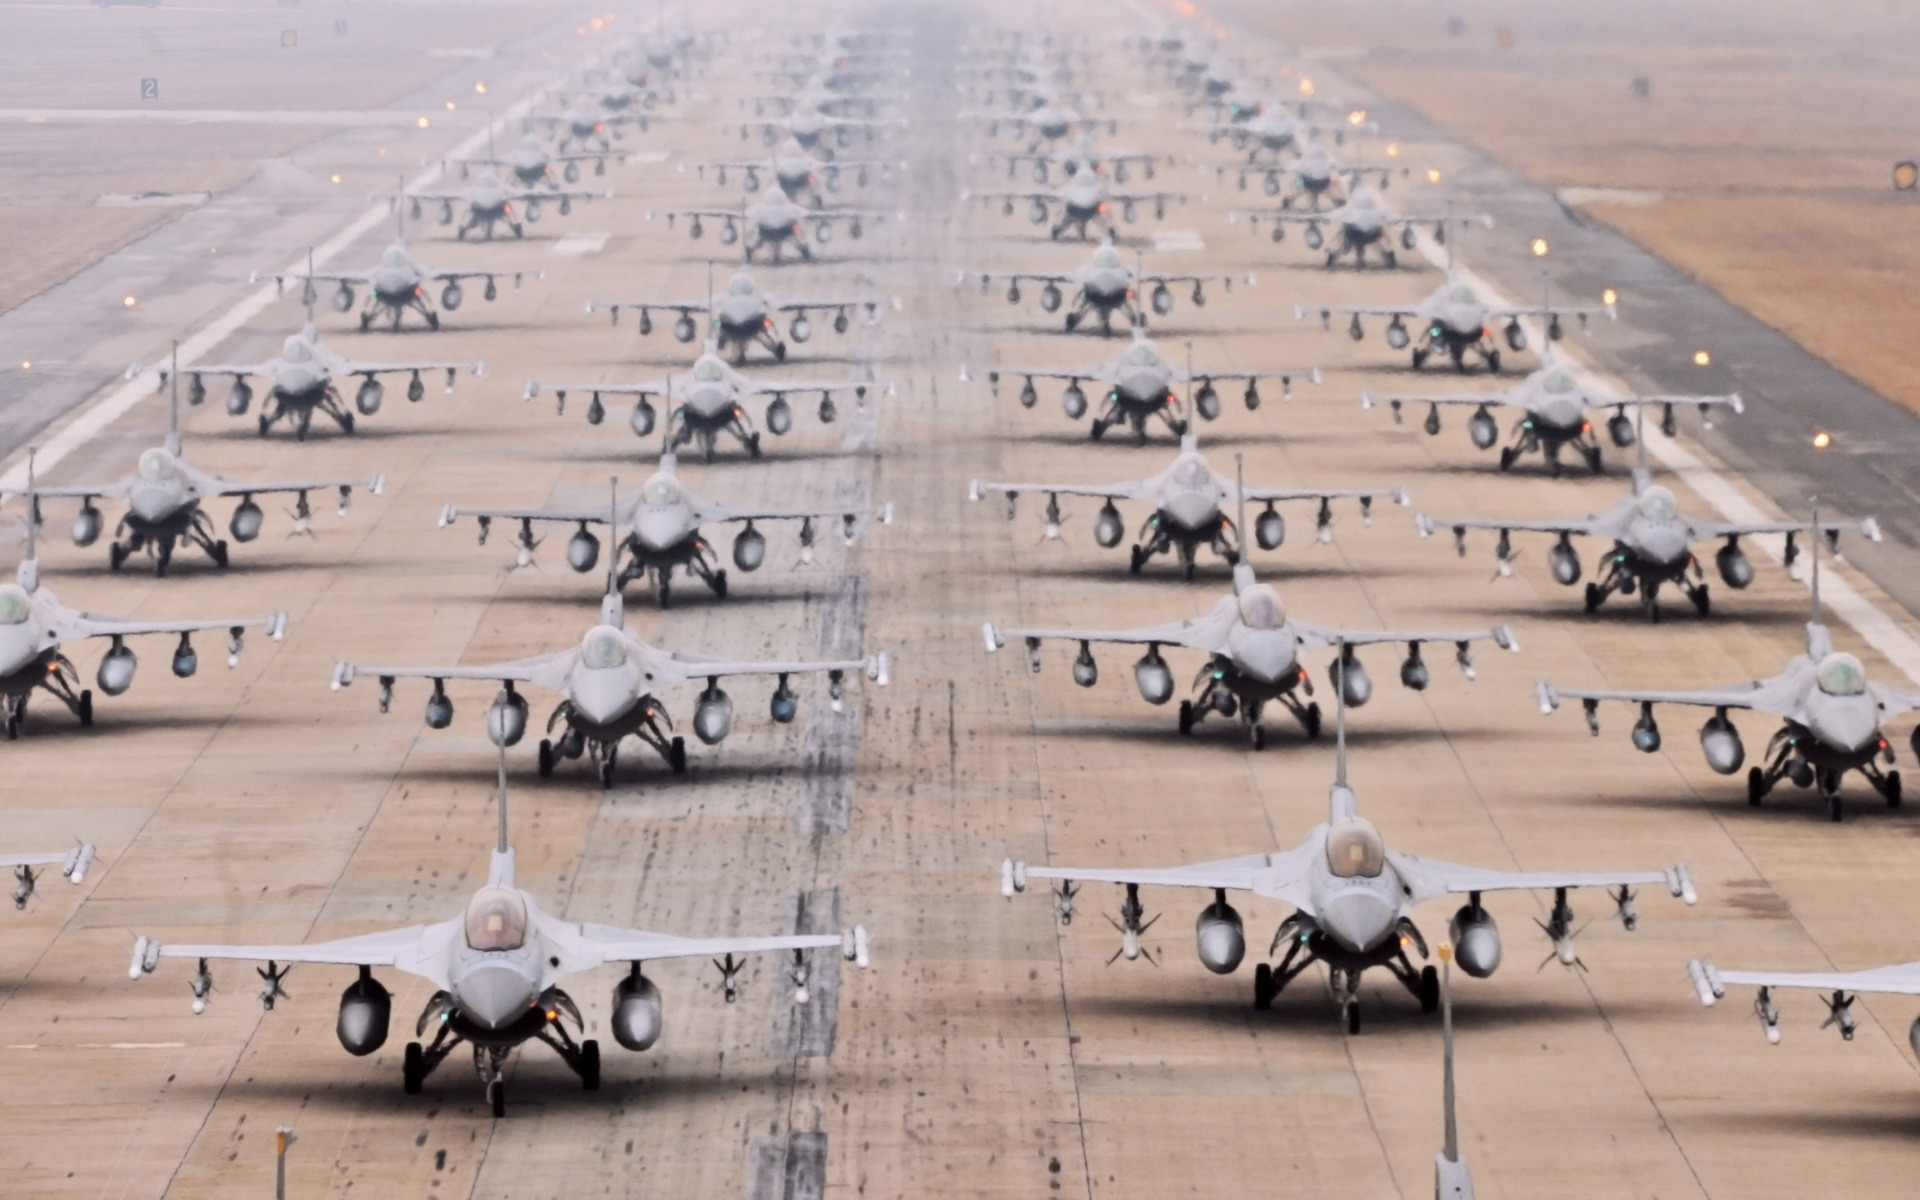 Army aircraft. Самолеты НАТО f16. F-35 США на ВПП. Военные самолеты США на авиабазе. Американские самолеты на аэродромах.